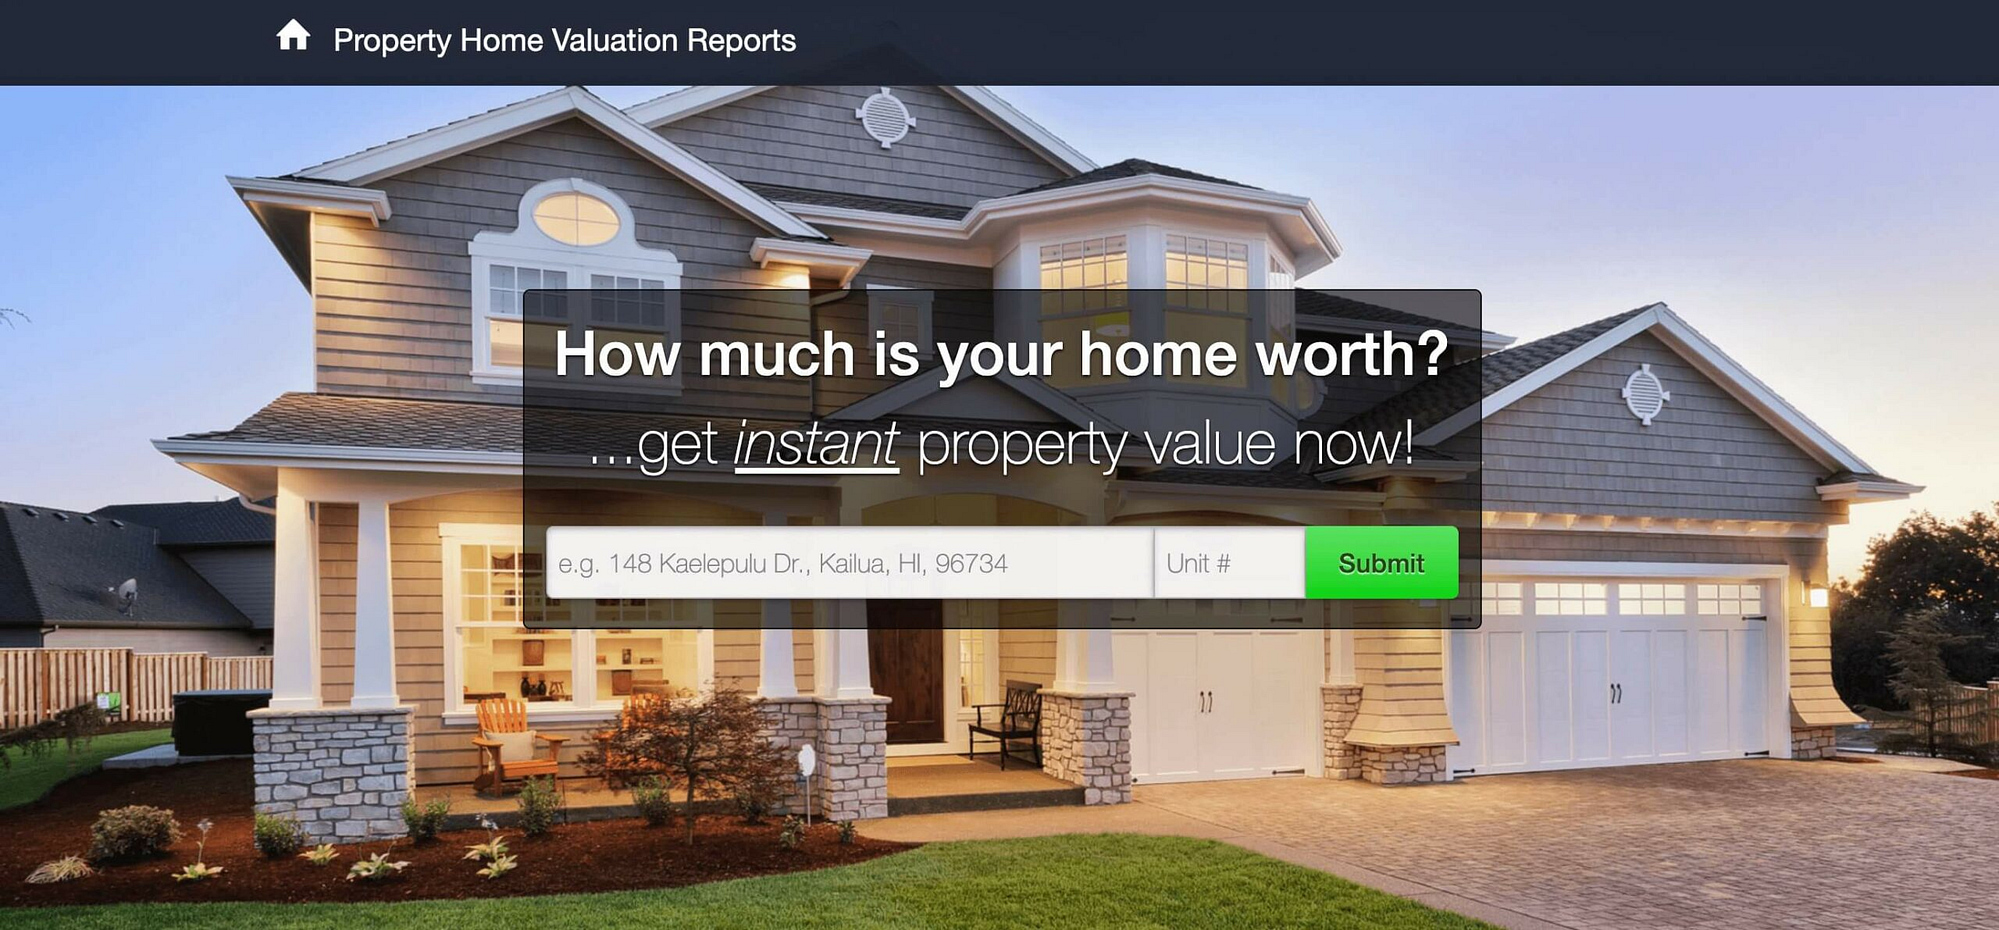 RealGeeks' property valuation tool.